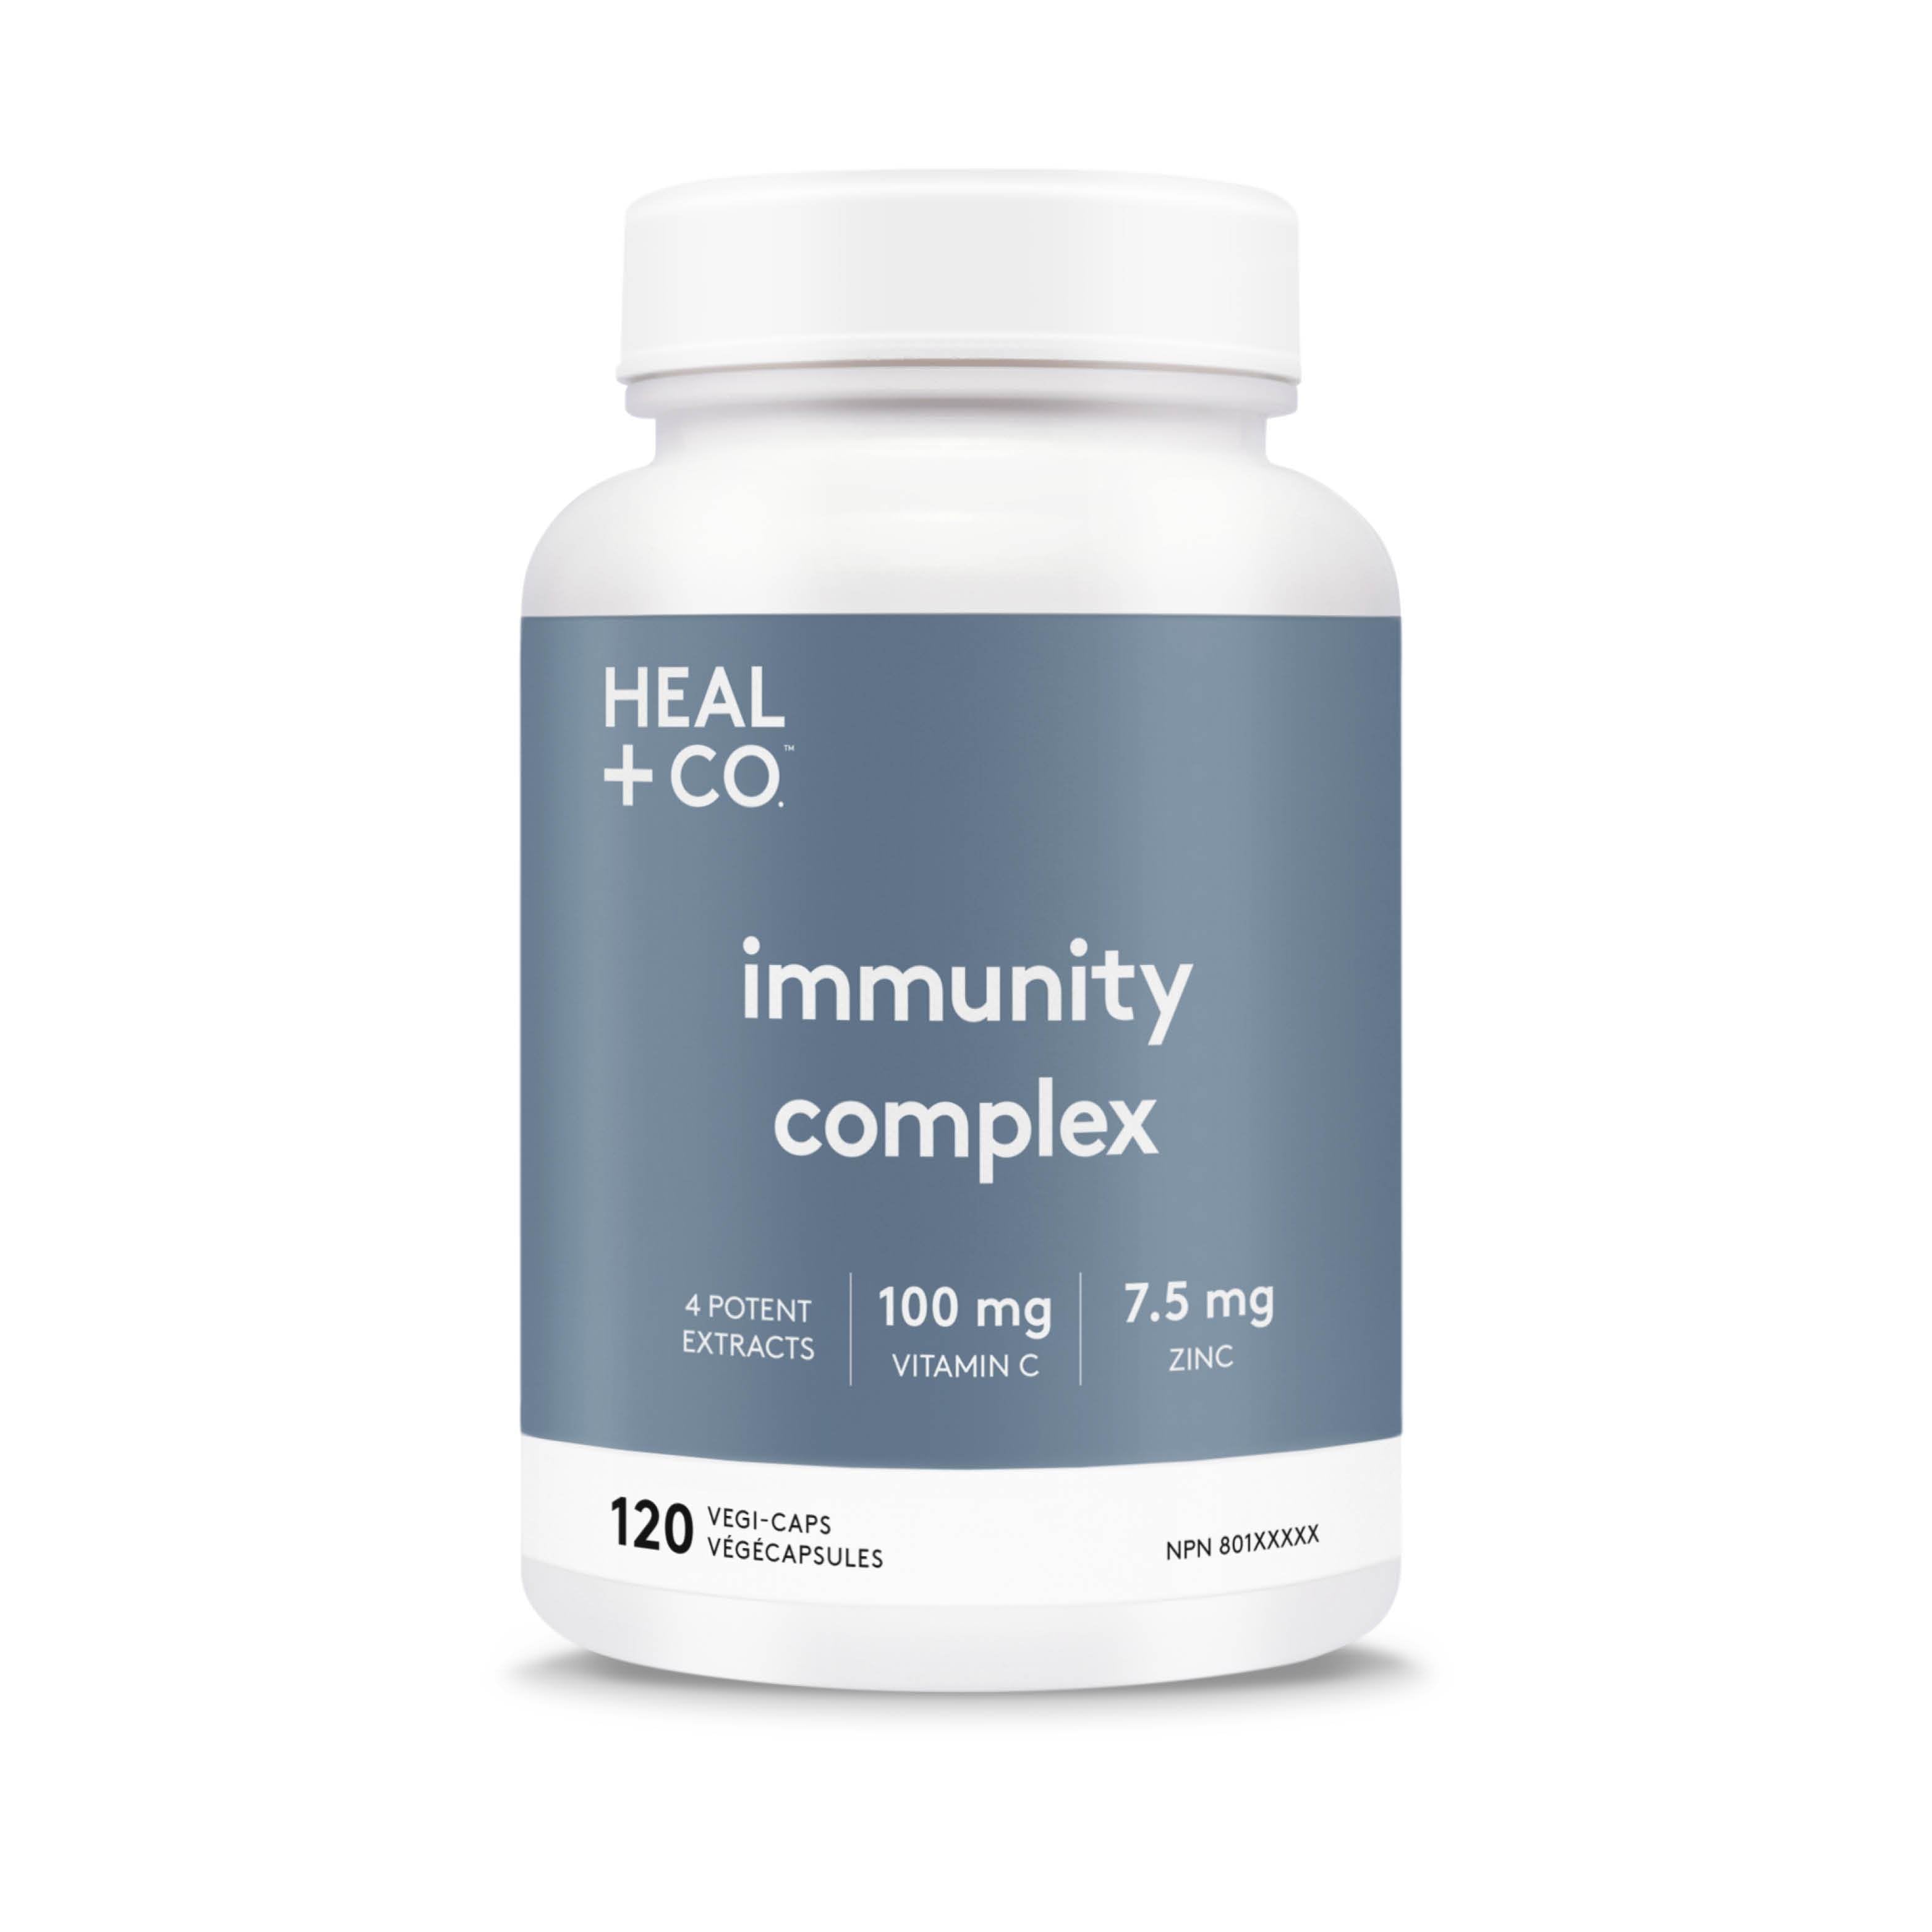 Heal + Co. Immunity Complex